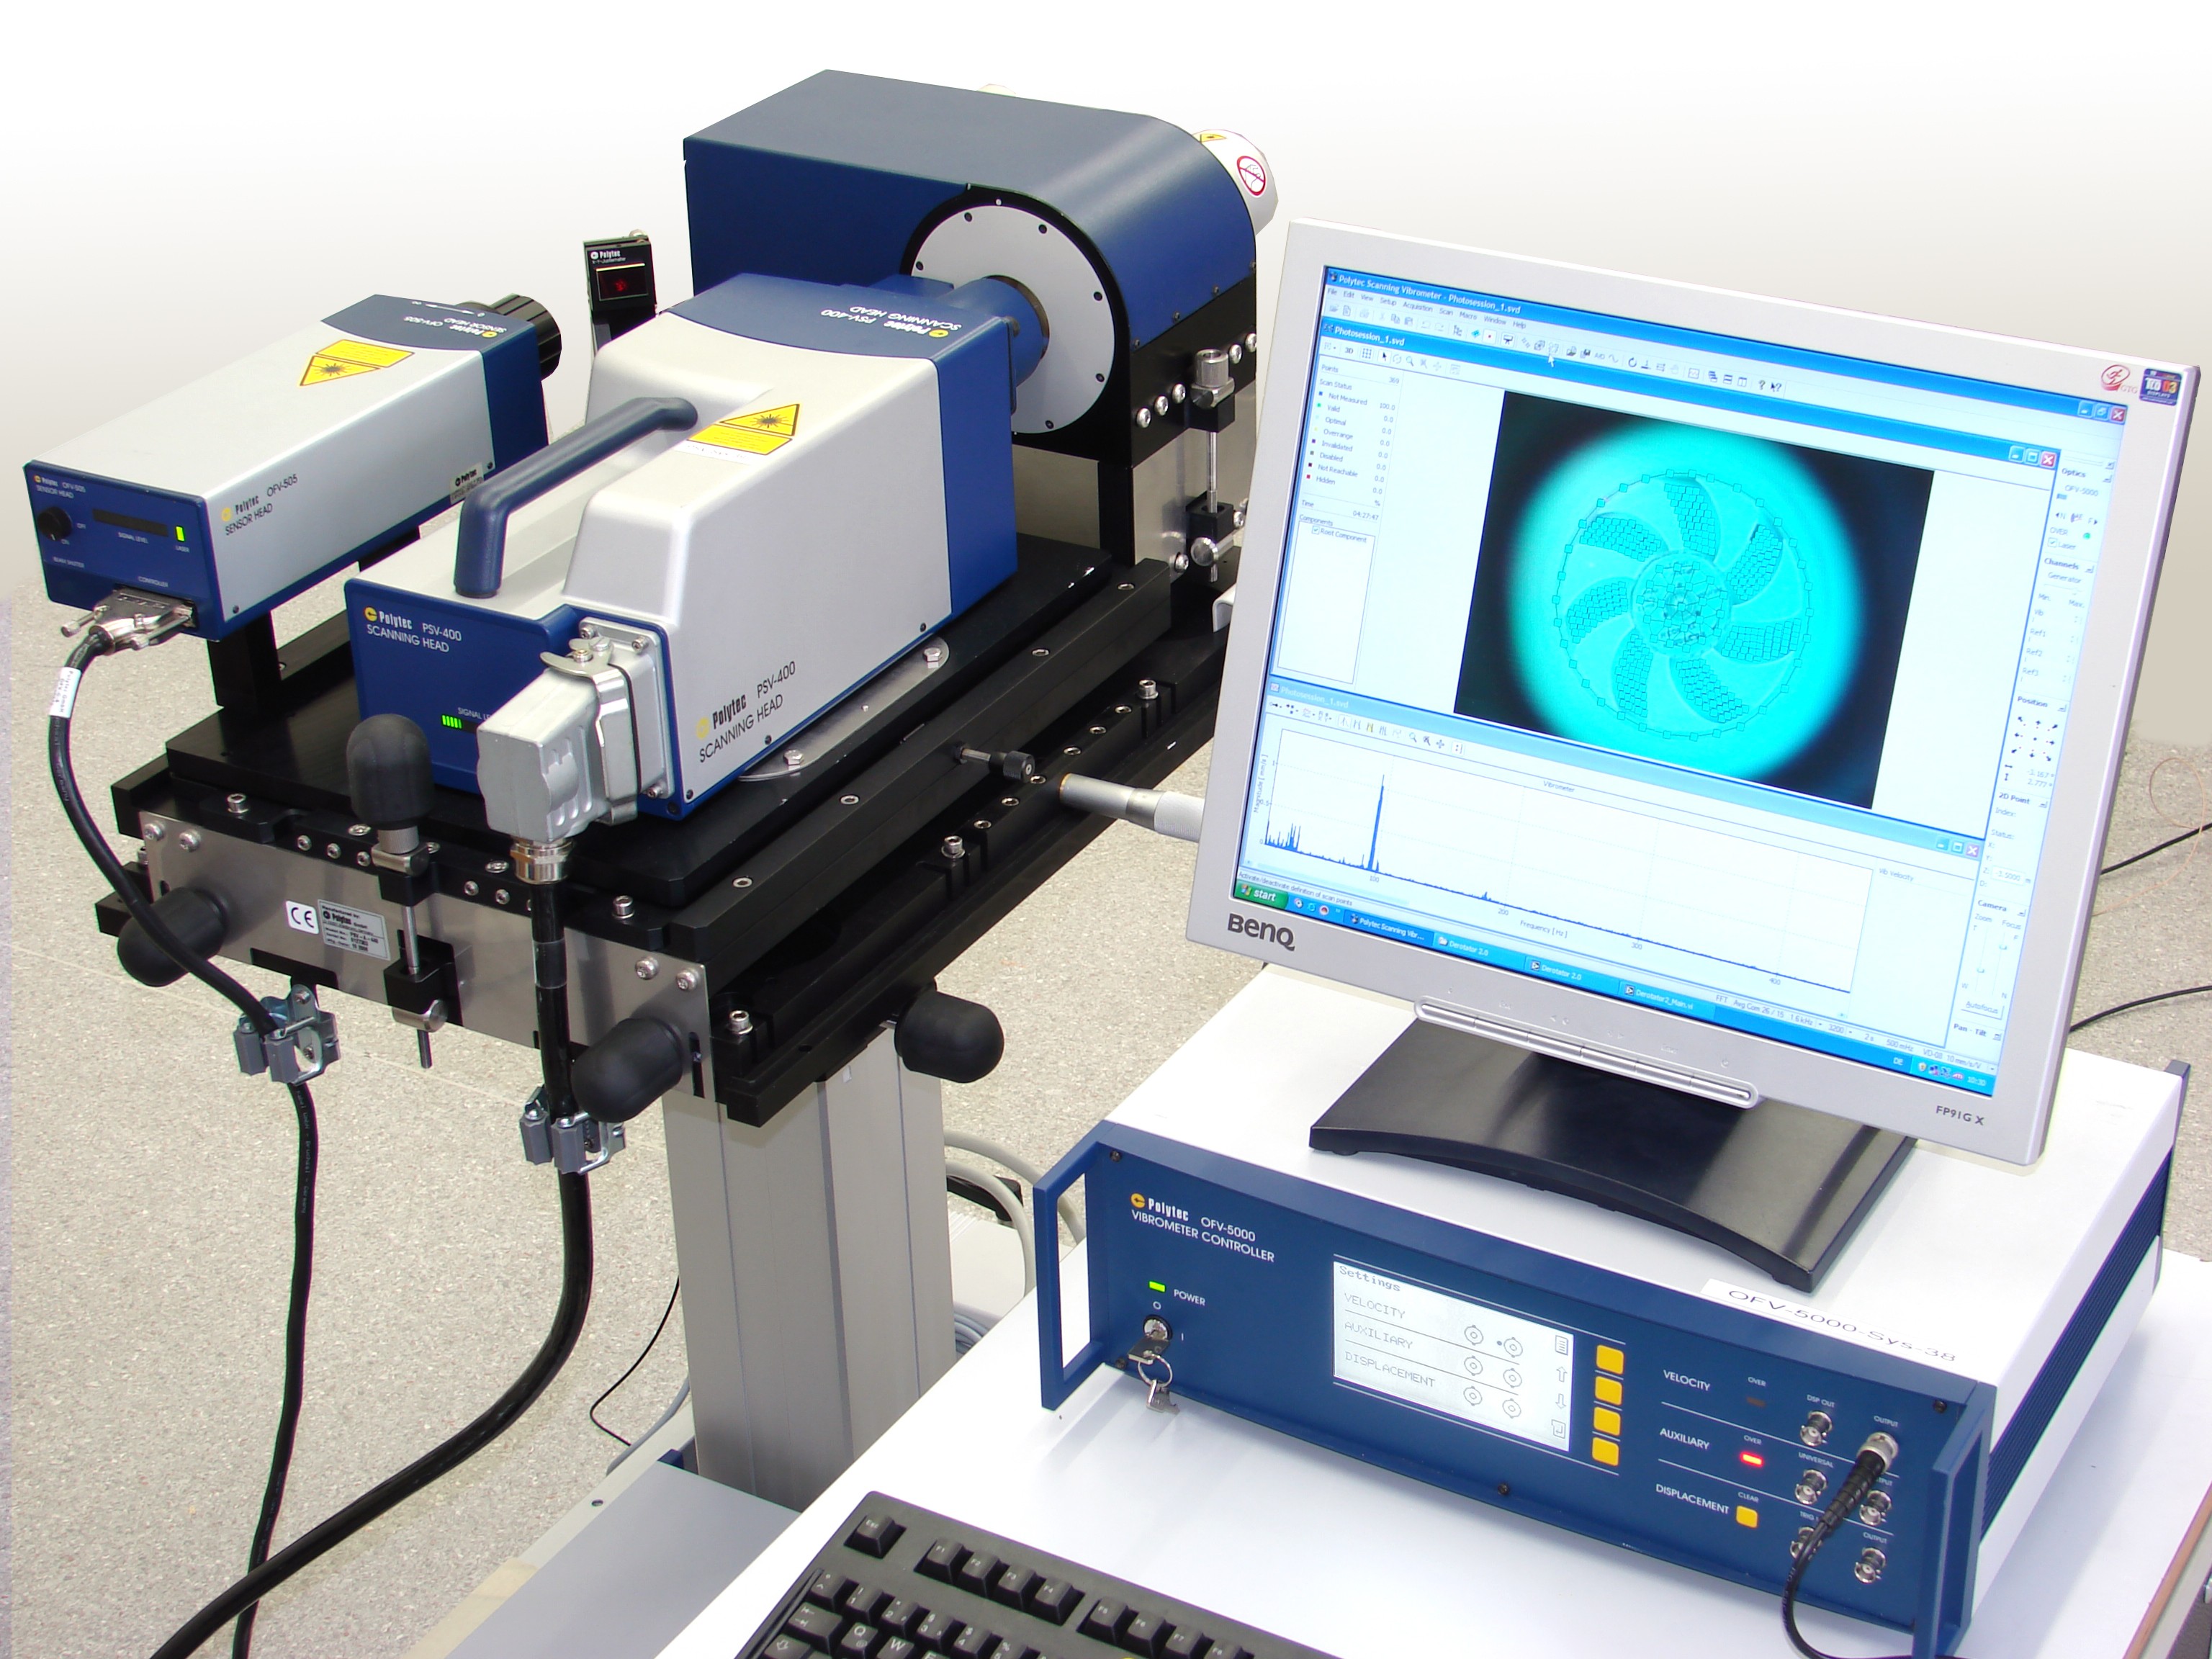 PSV-500-3D 扫描式激光测振仪